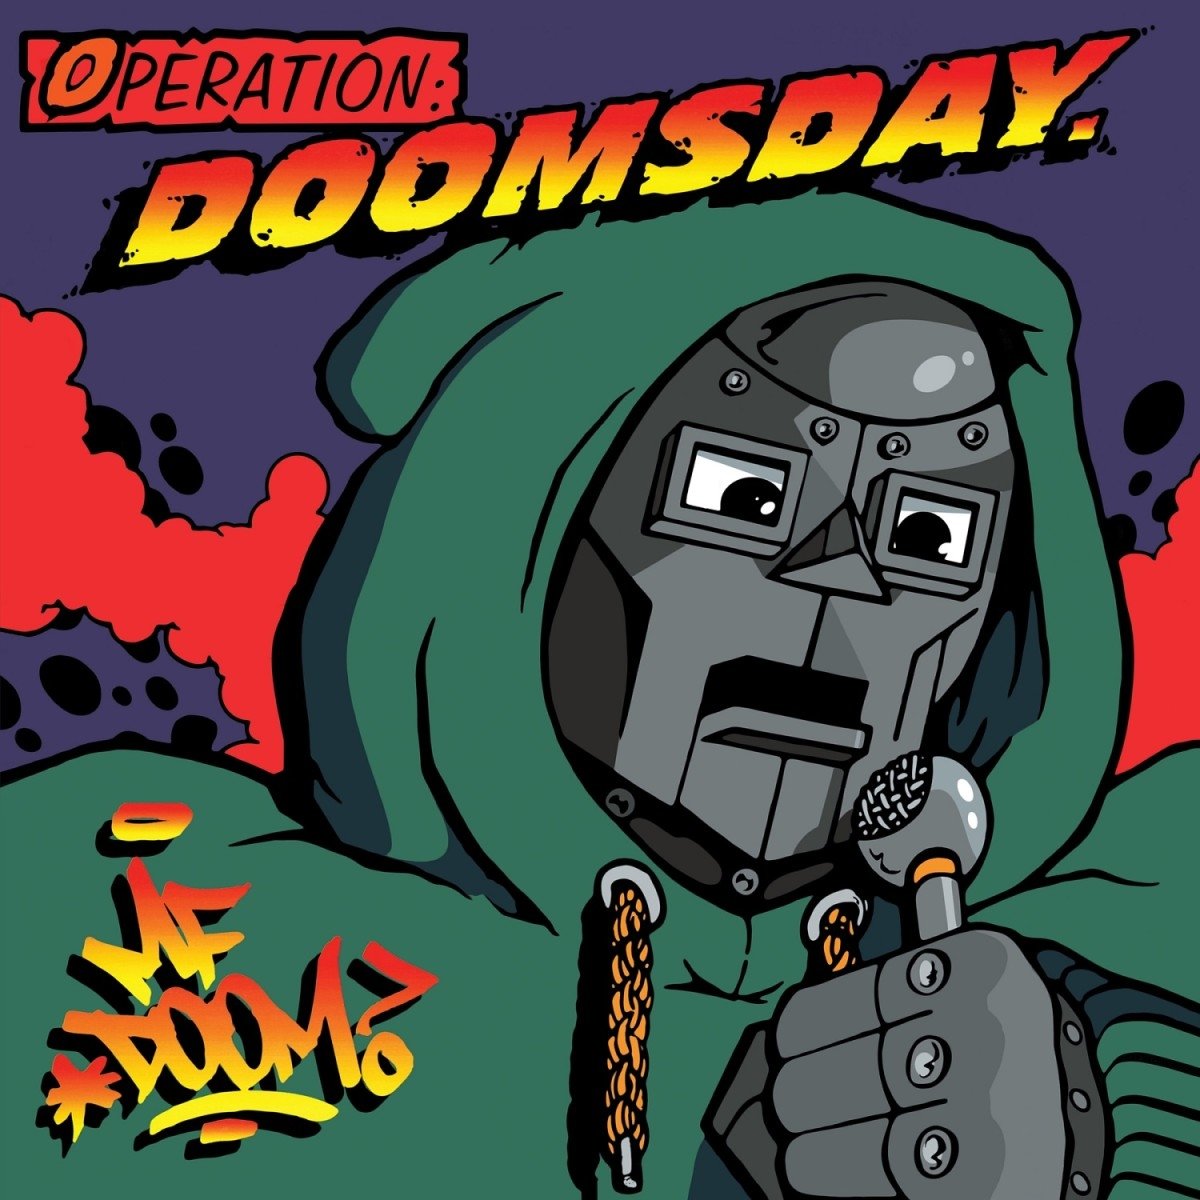 MF DOOM "Operation : Doomsday" 2LP